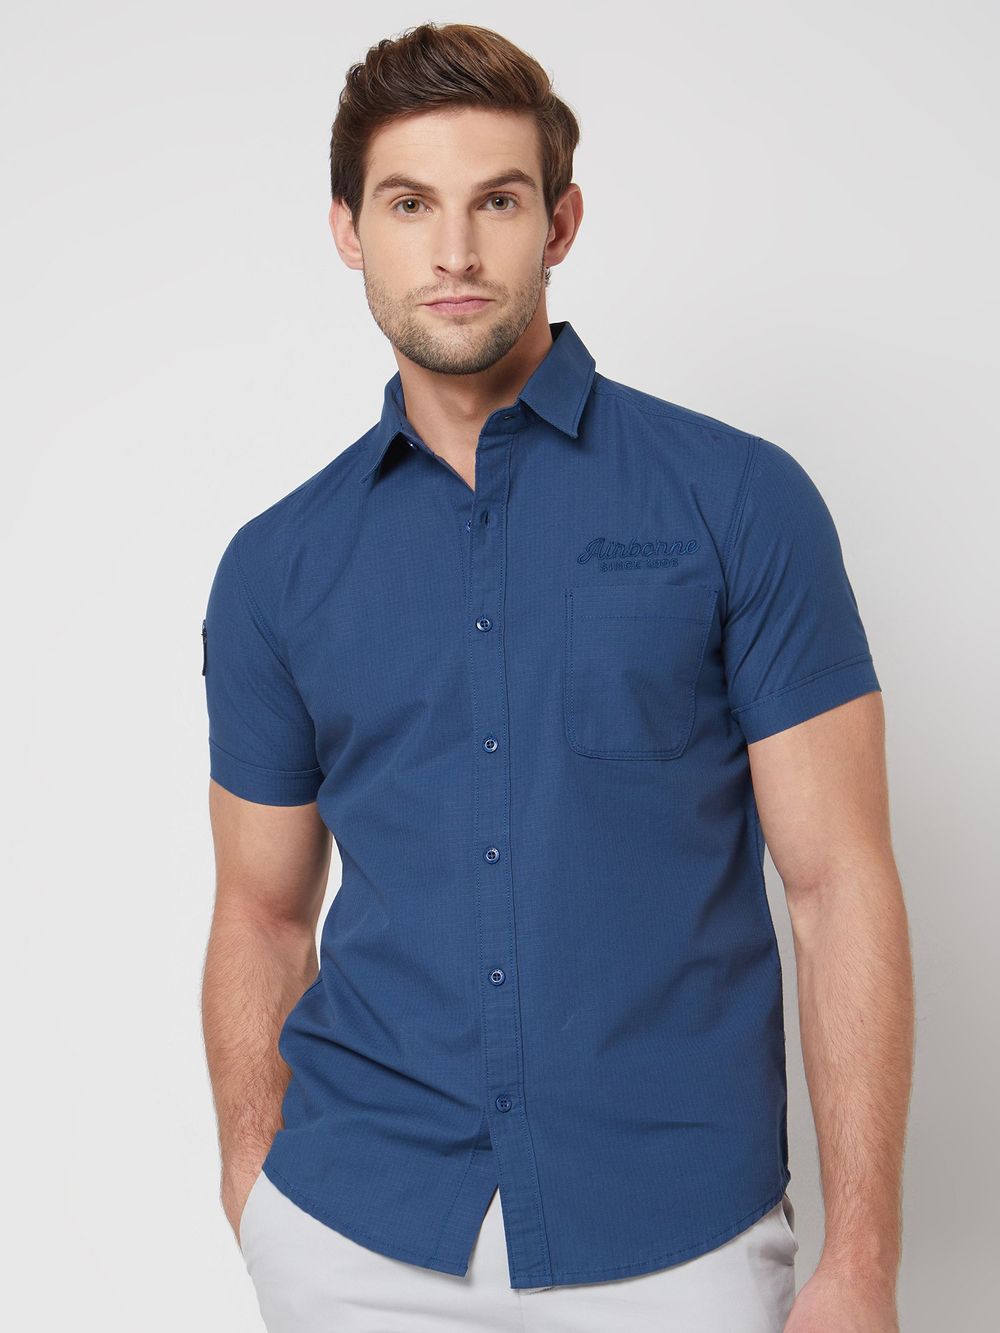 Blue Badged Plain Slim Fit Casual Shirt